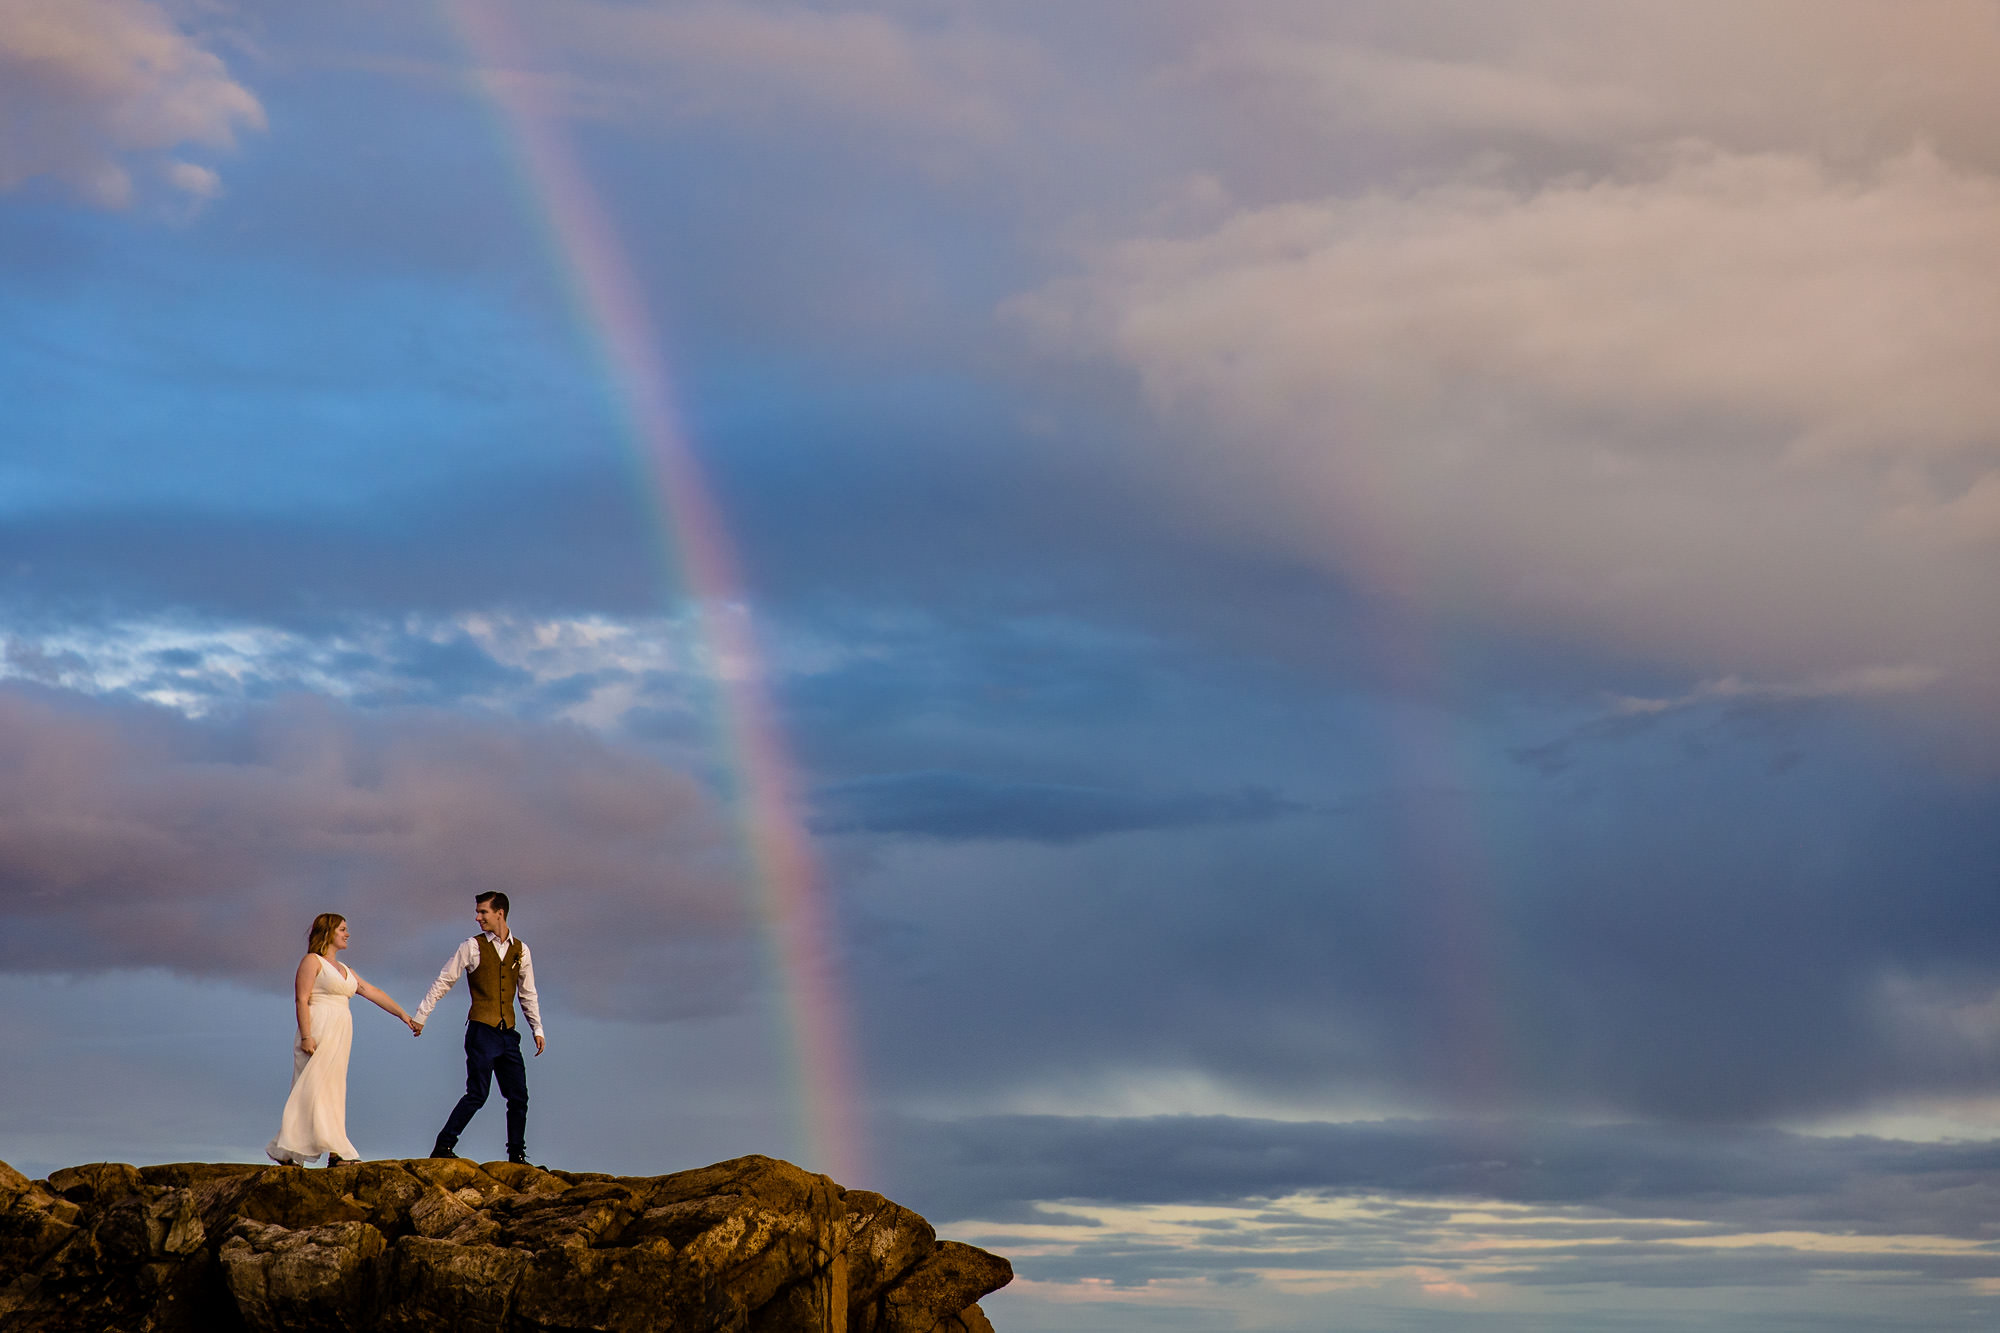 Dramatic landscape wedding portraits in Acadia National Park